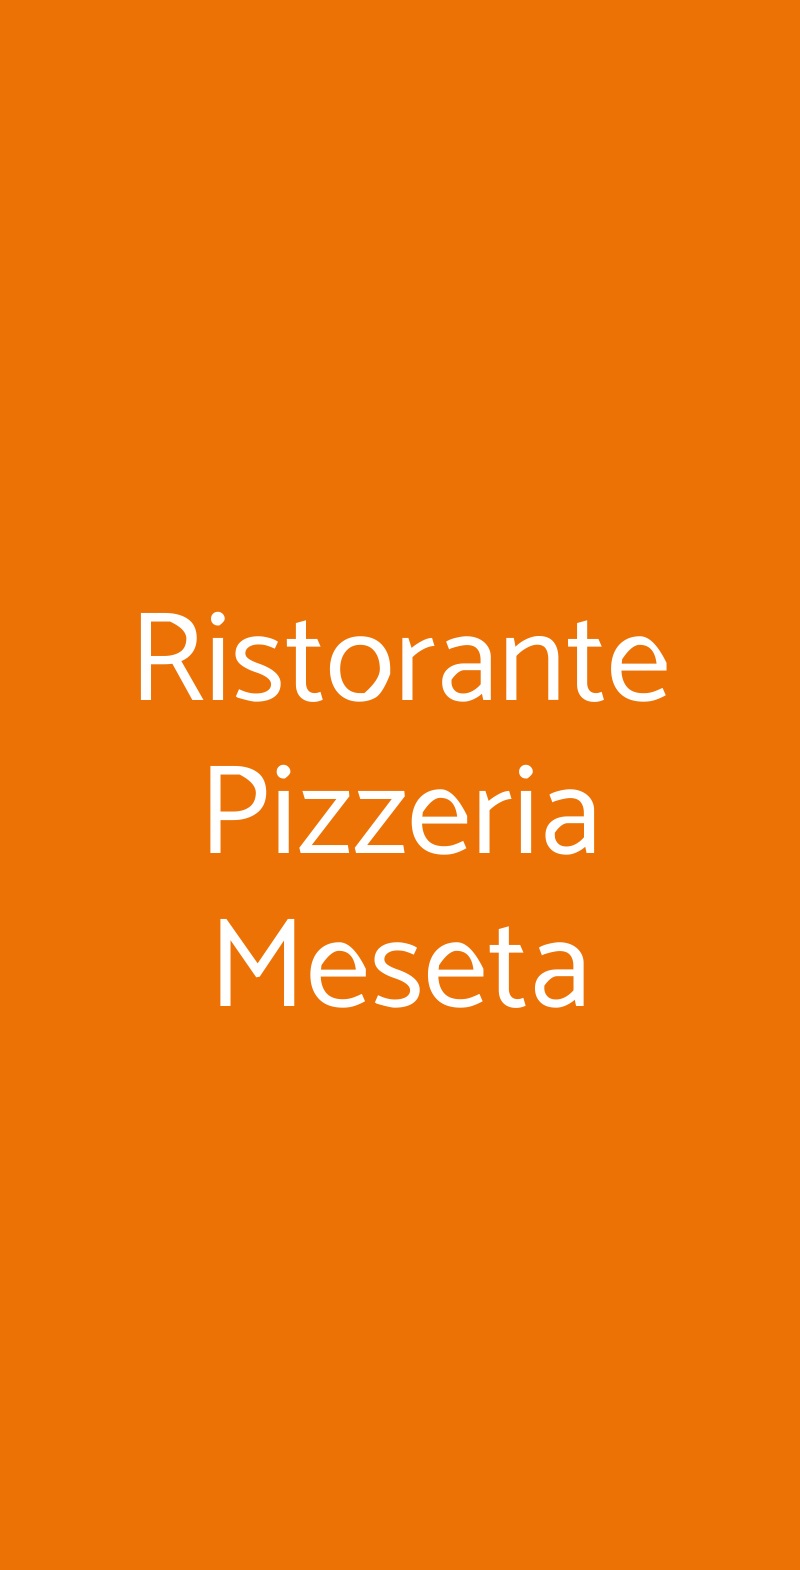 Ristorante Pizzeria Meseta Bacoli menù 1 pagina